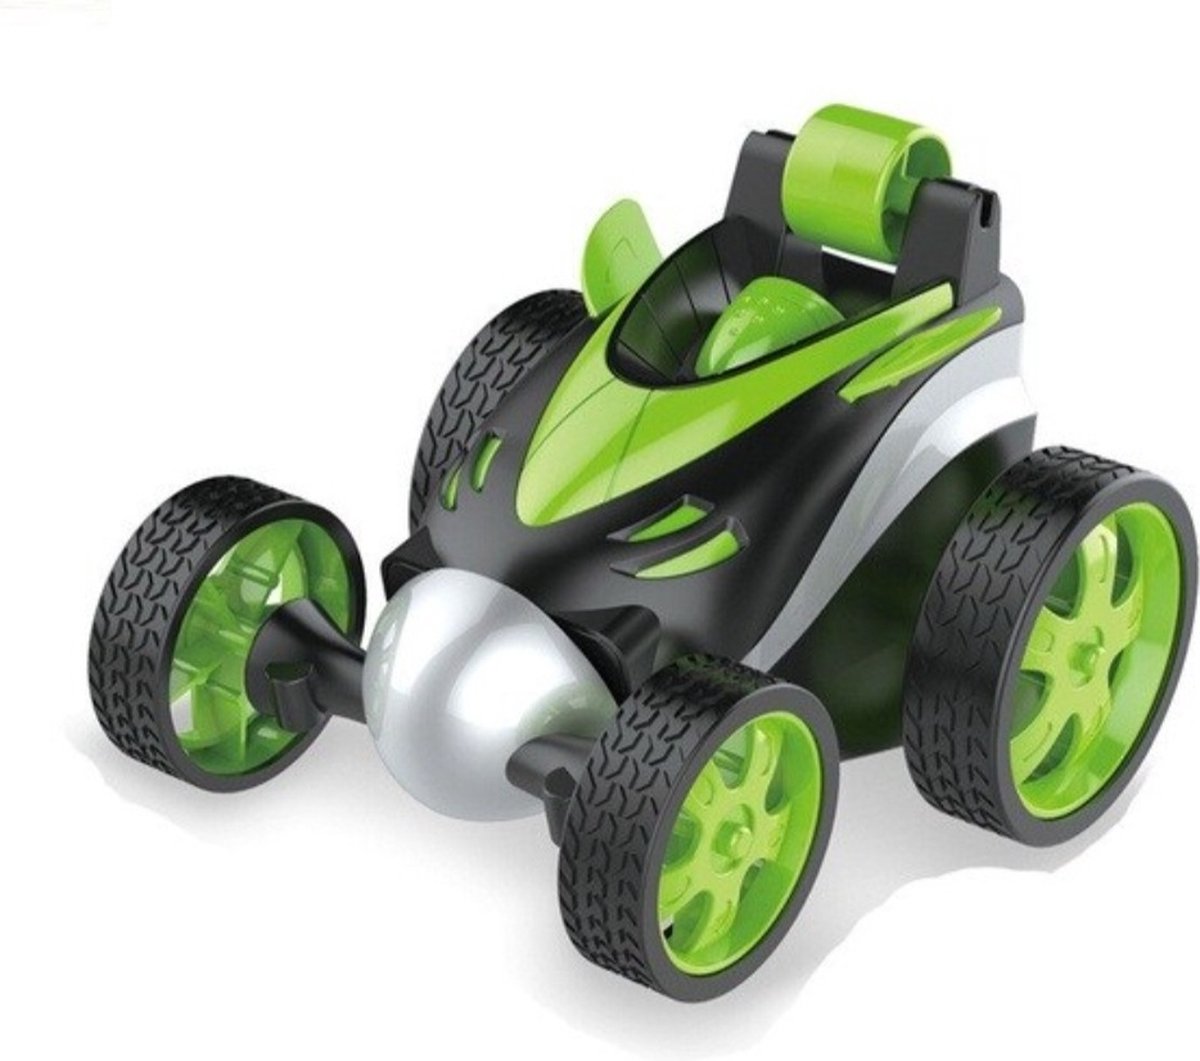 Bestuurbare stuntbuggy , car with remote control 360° spins- Groen